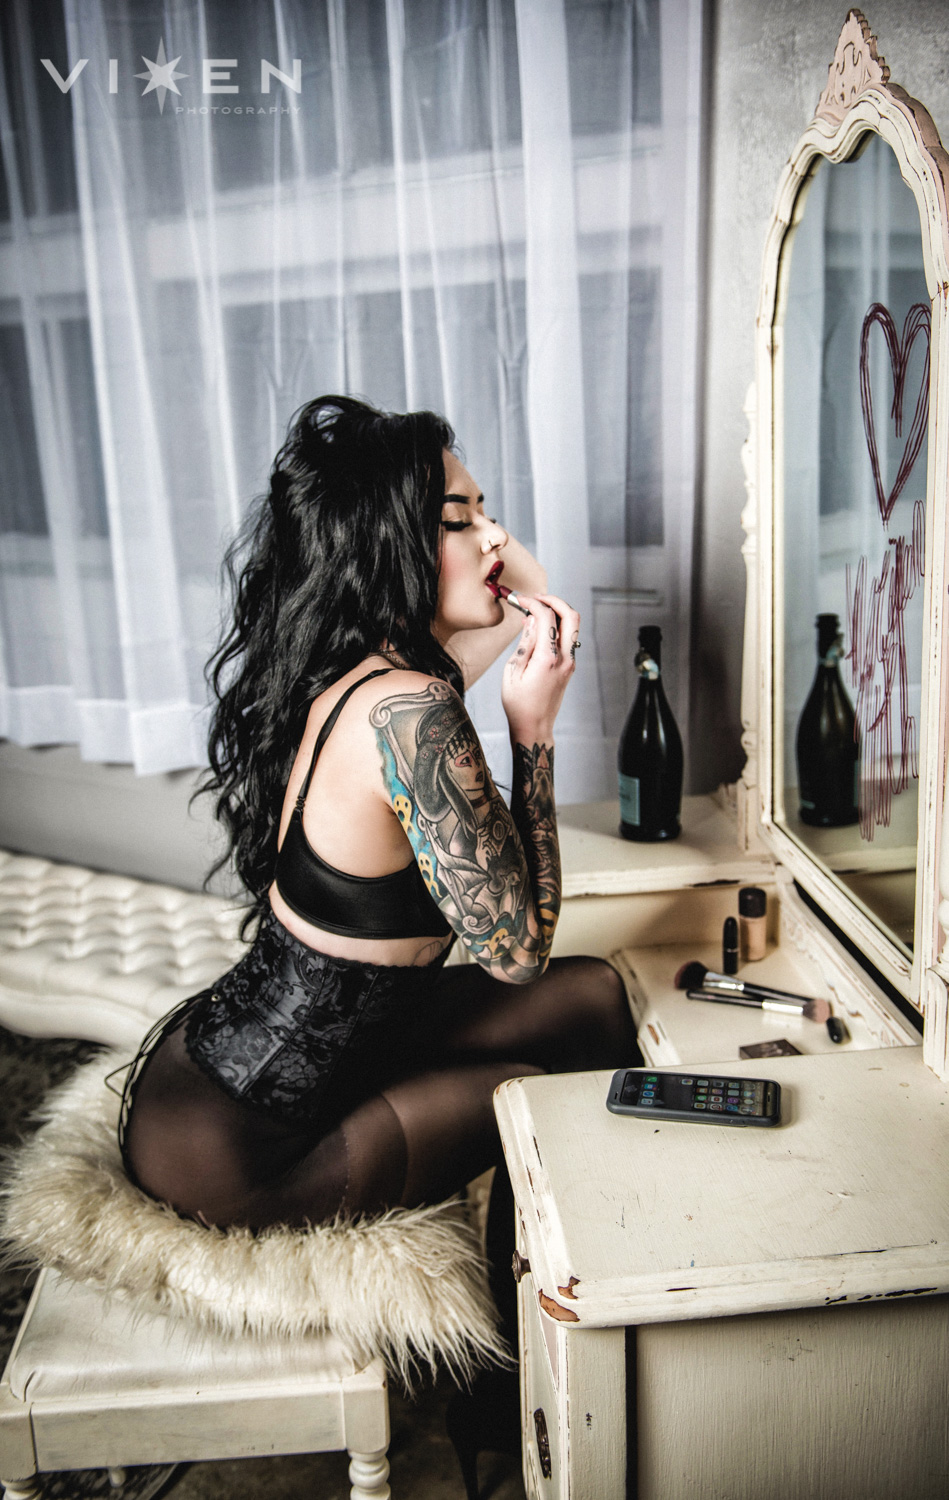 Goth Pinup - Alt Model - Hannah Nicole - Fetish Photography - VIXEN Photography - San Diego - Inked Girl - Tattooed Model